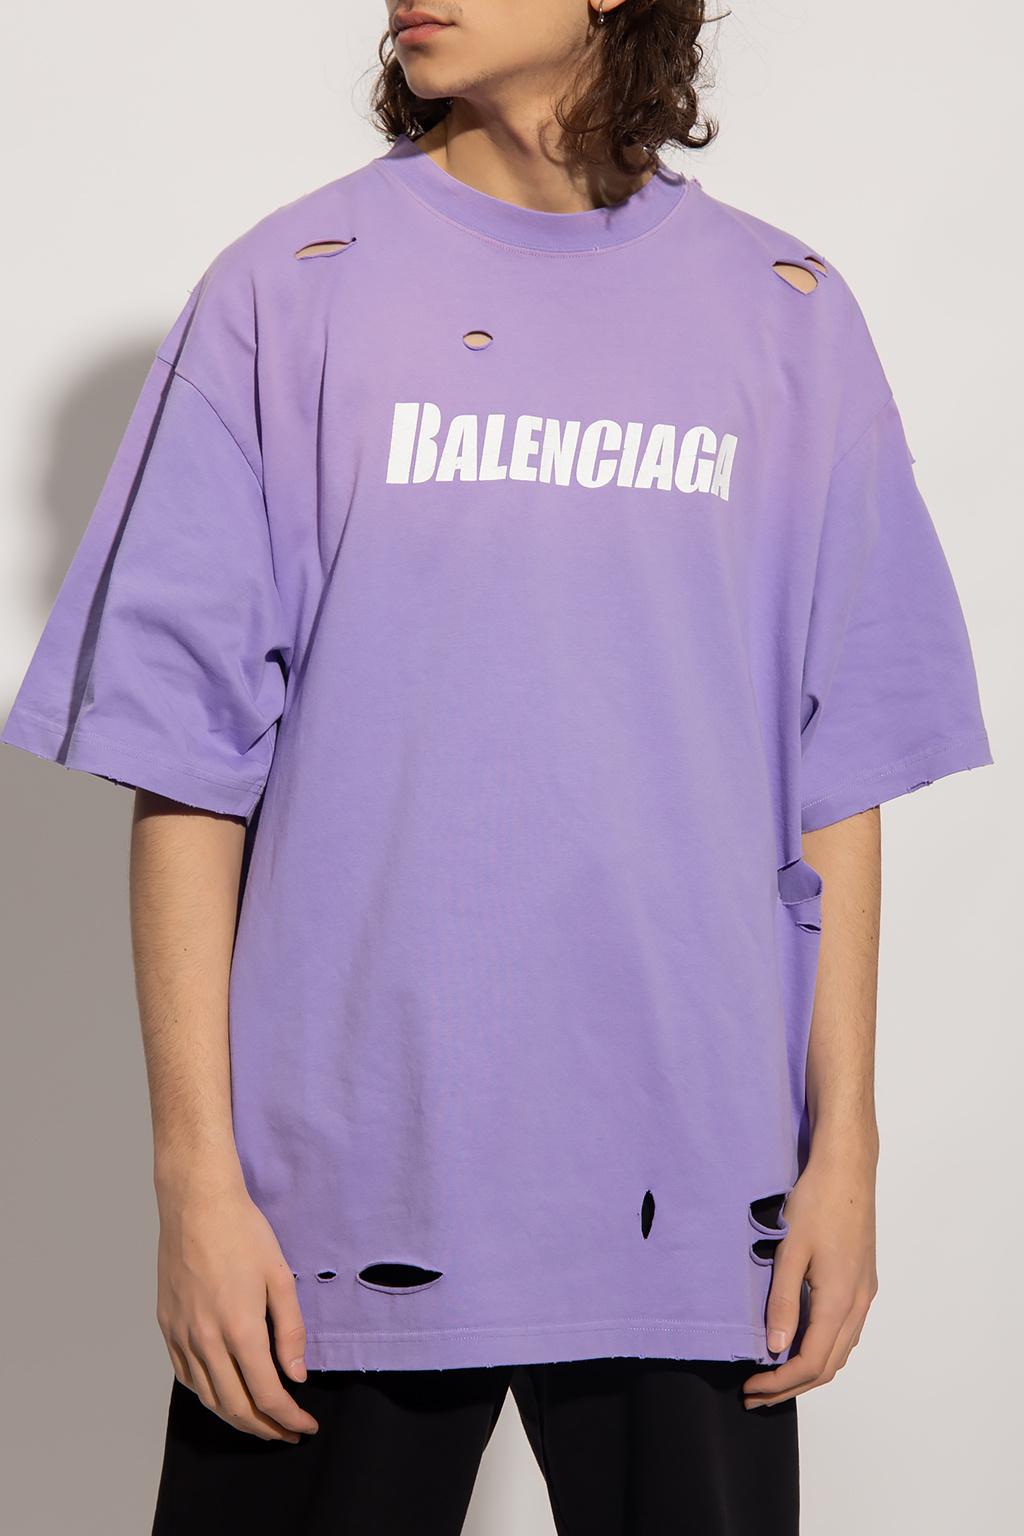 Balenciaga T-shirt Fleece with faded effect